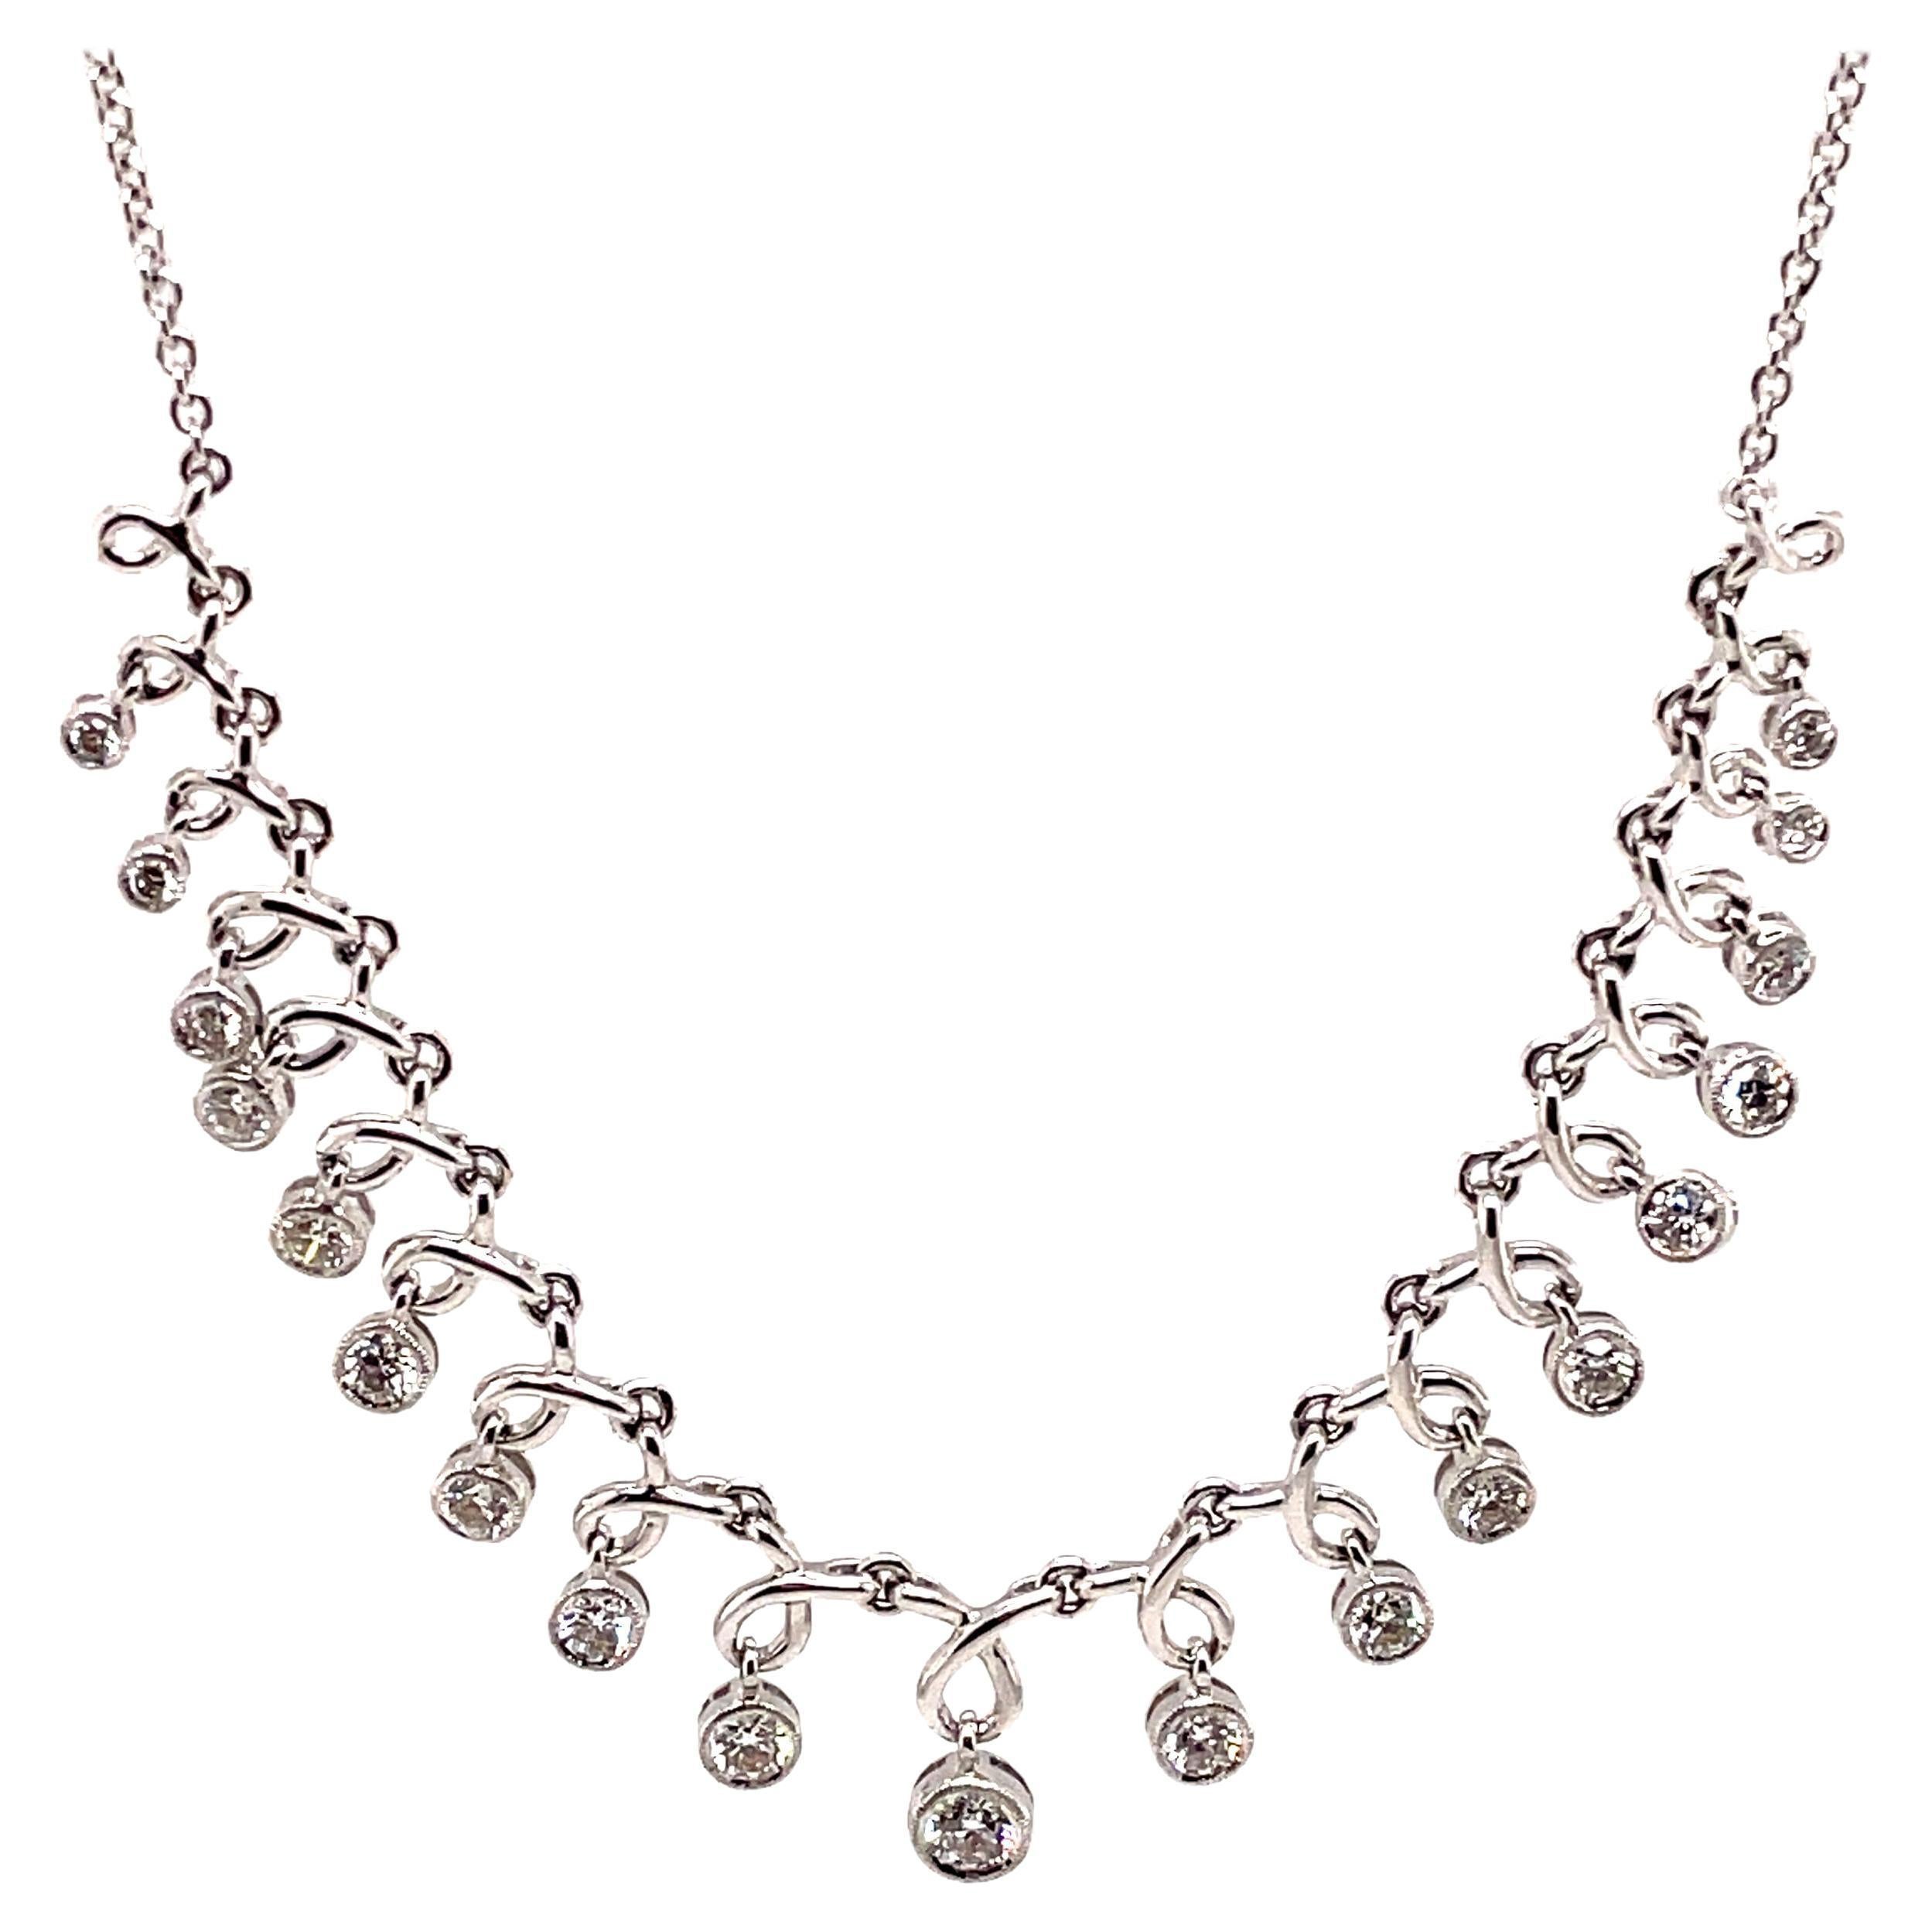 1.24ct Dangling Bezel Set Diamond Necklace 18k White Gold